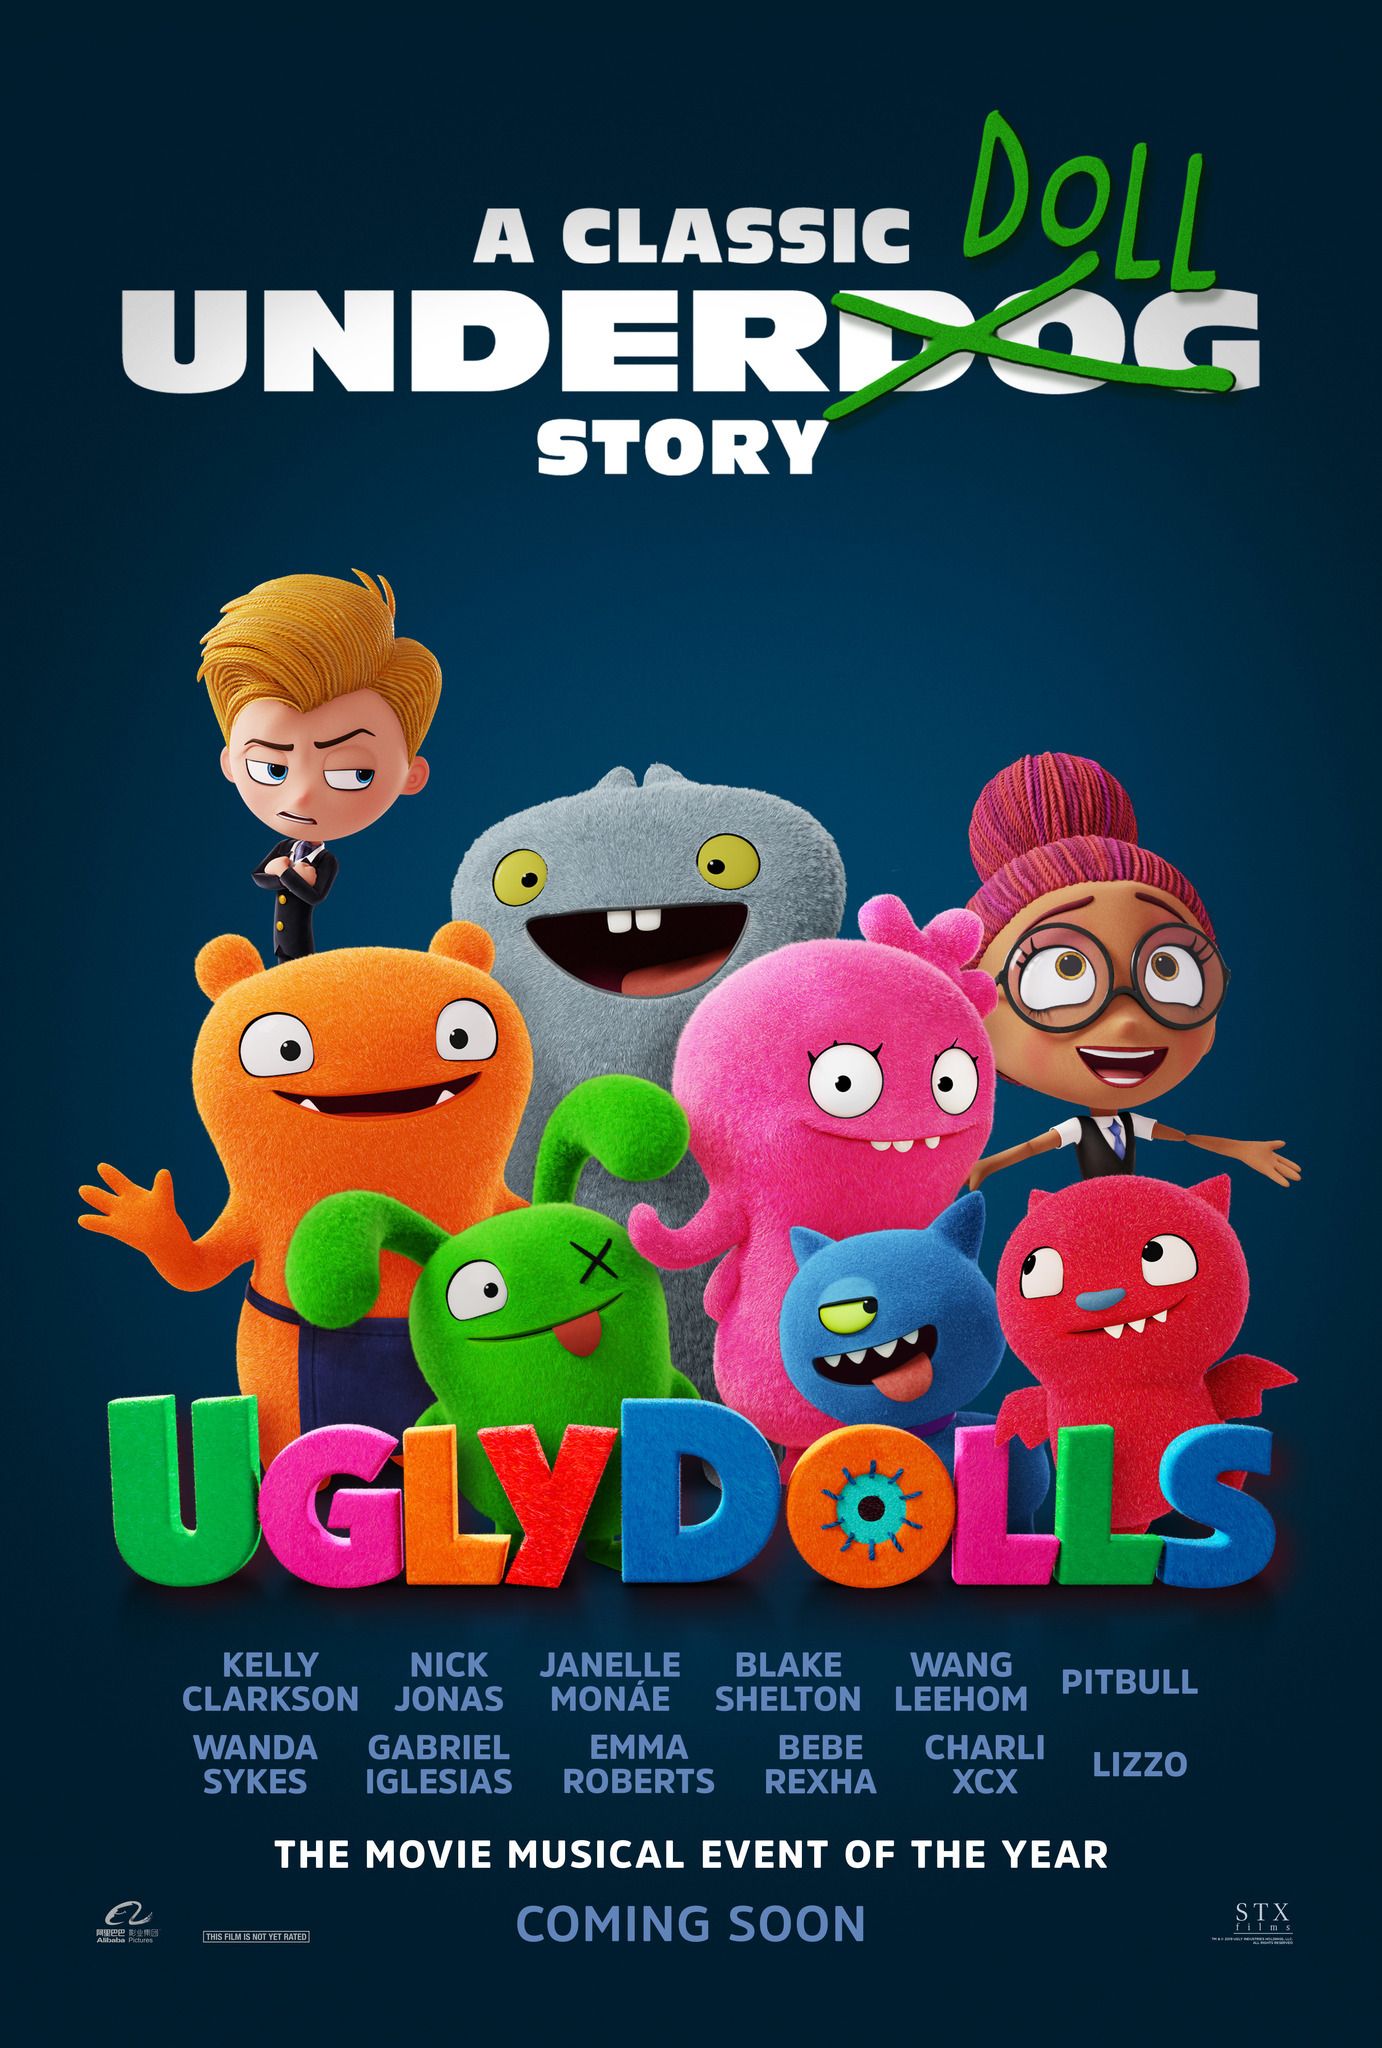 Uglydolls posters